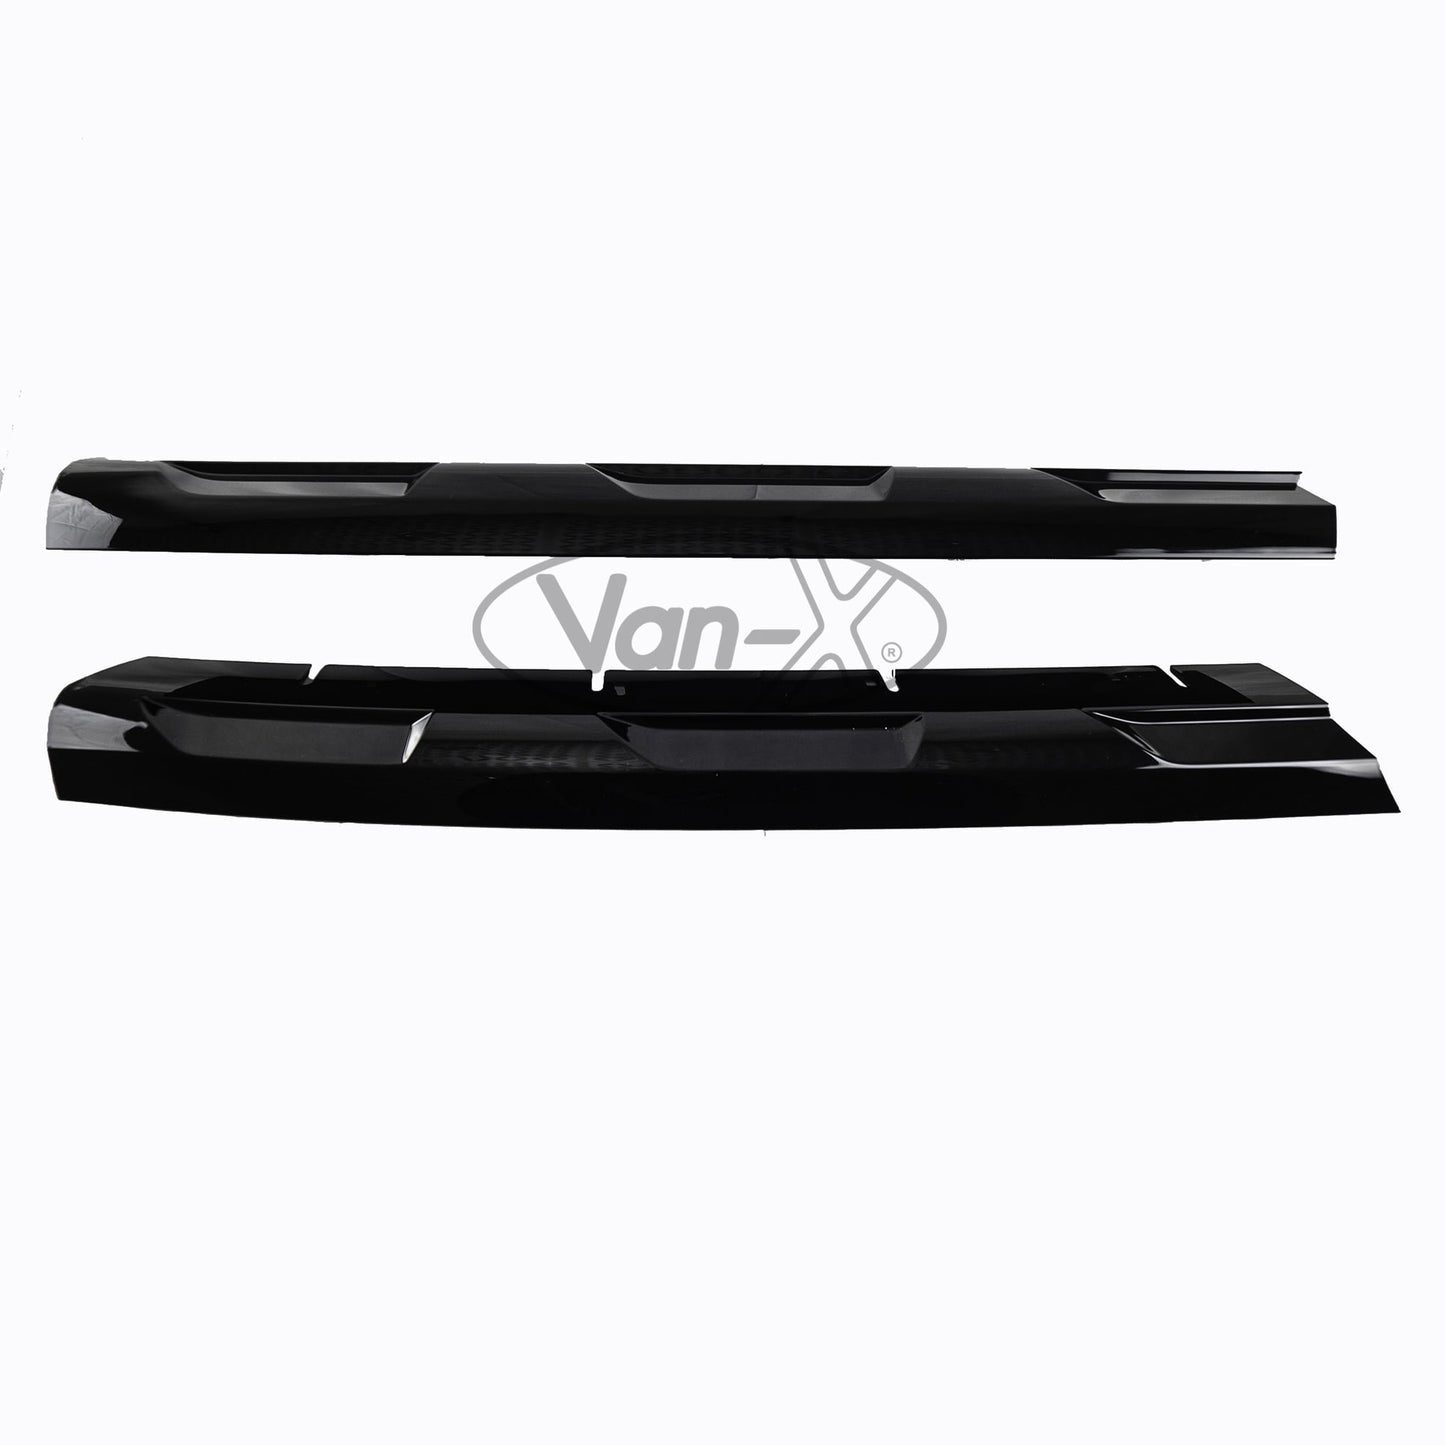 VAN-X VW Transporter T6 R-Line Front Grille Trims - Gloss Black 0 - T6-533-GB